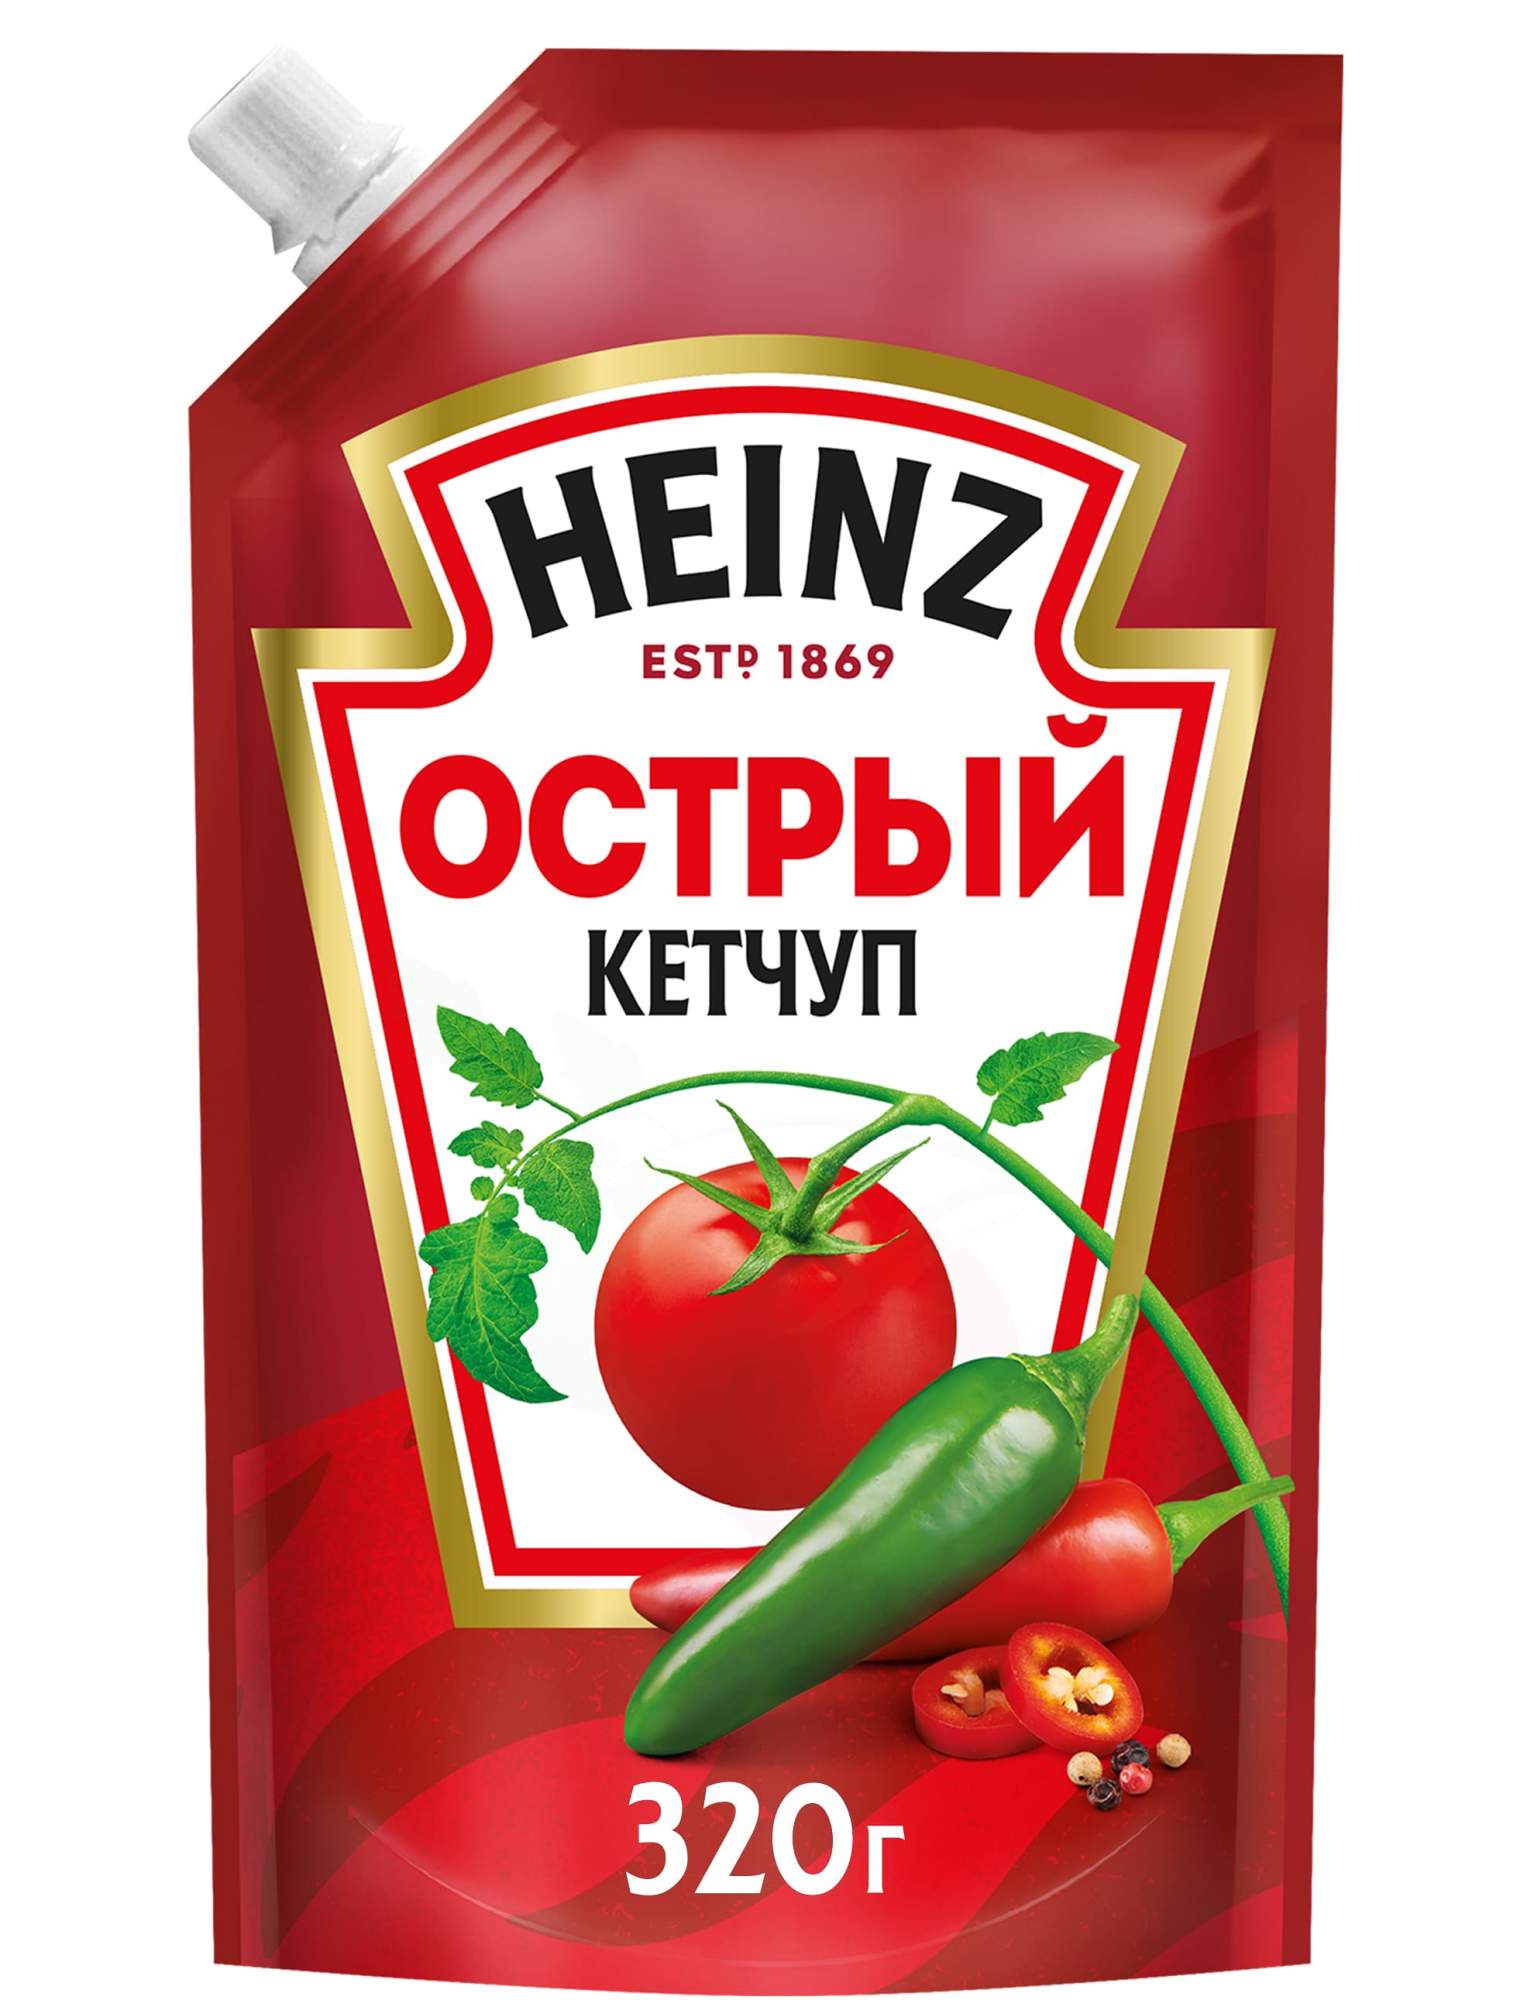 Купить кетчуп Heinz Острый 320г, цены на Мегамаркет | Артикул: 100029933908